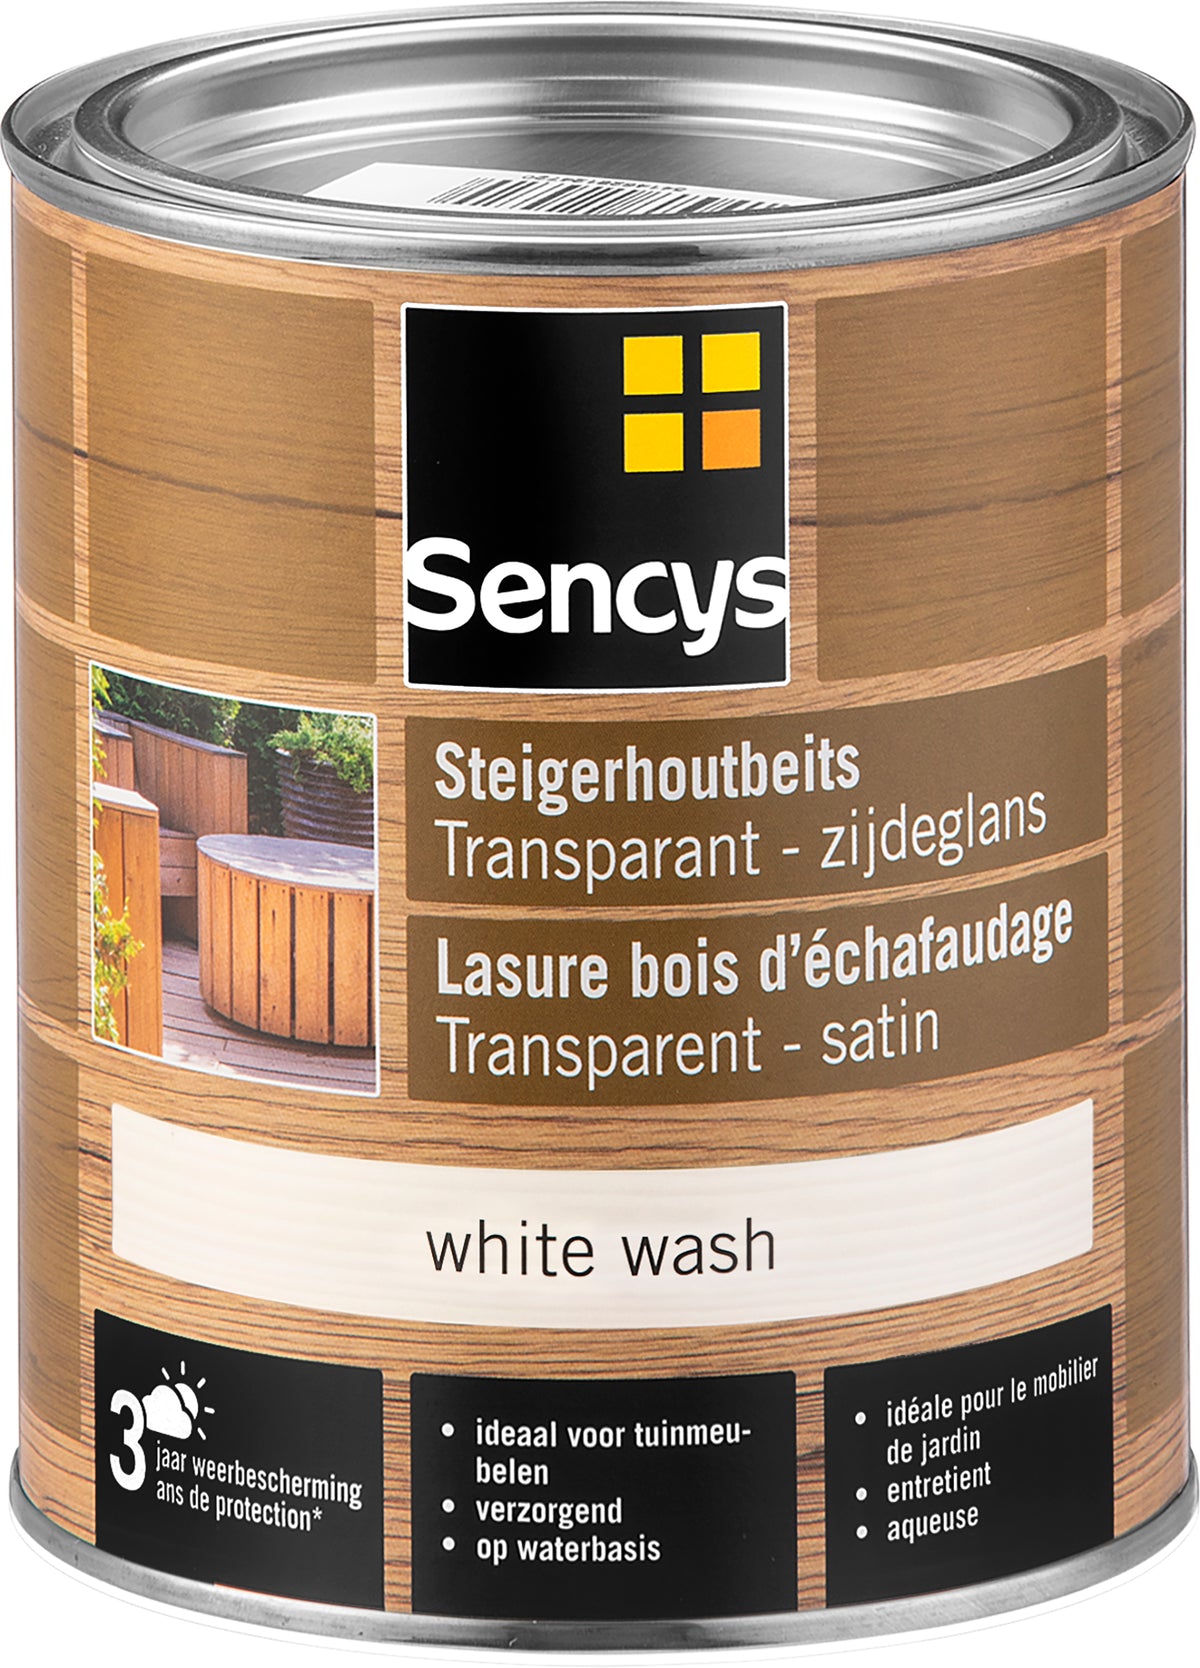 Sencys steigerhoutbeits transparant white wash 750ml